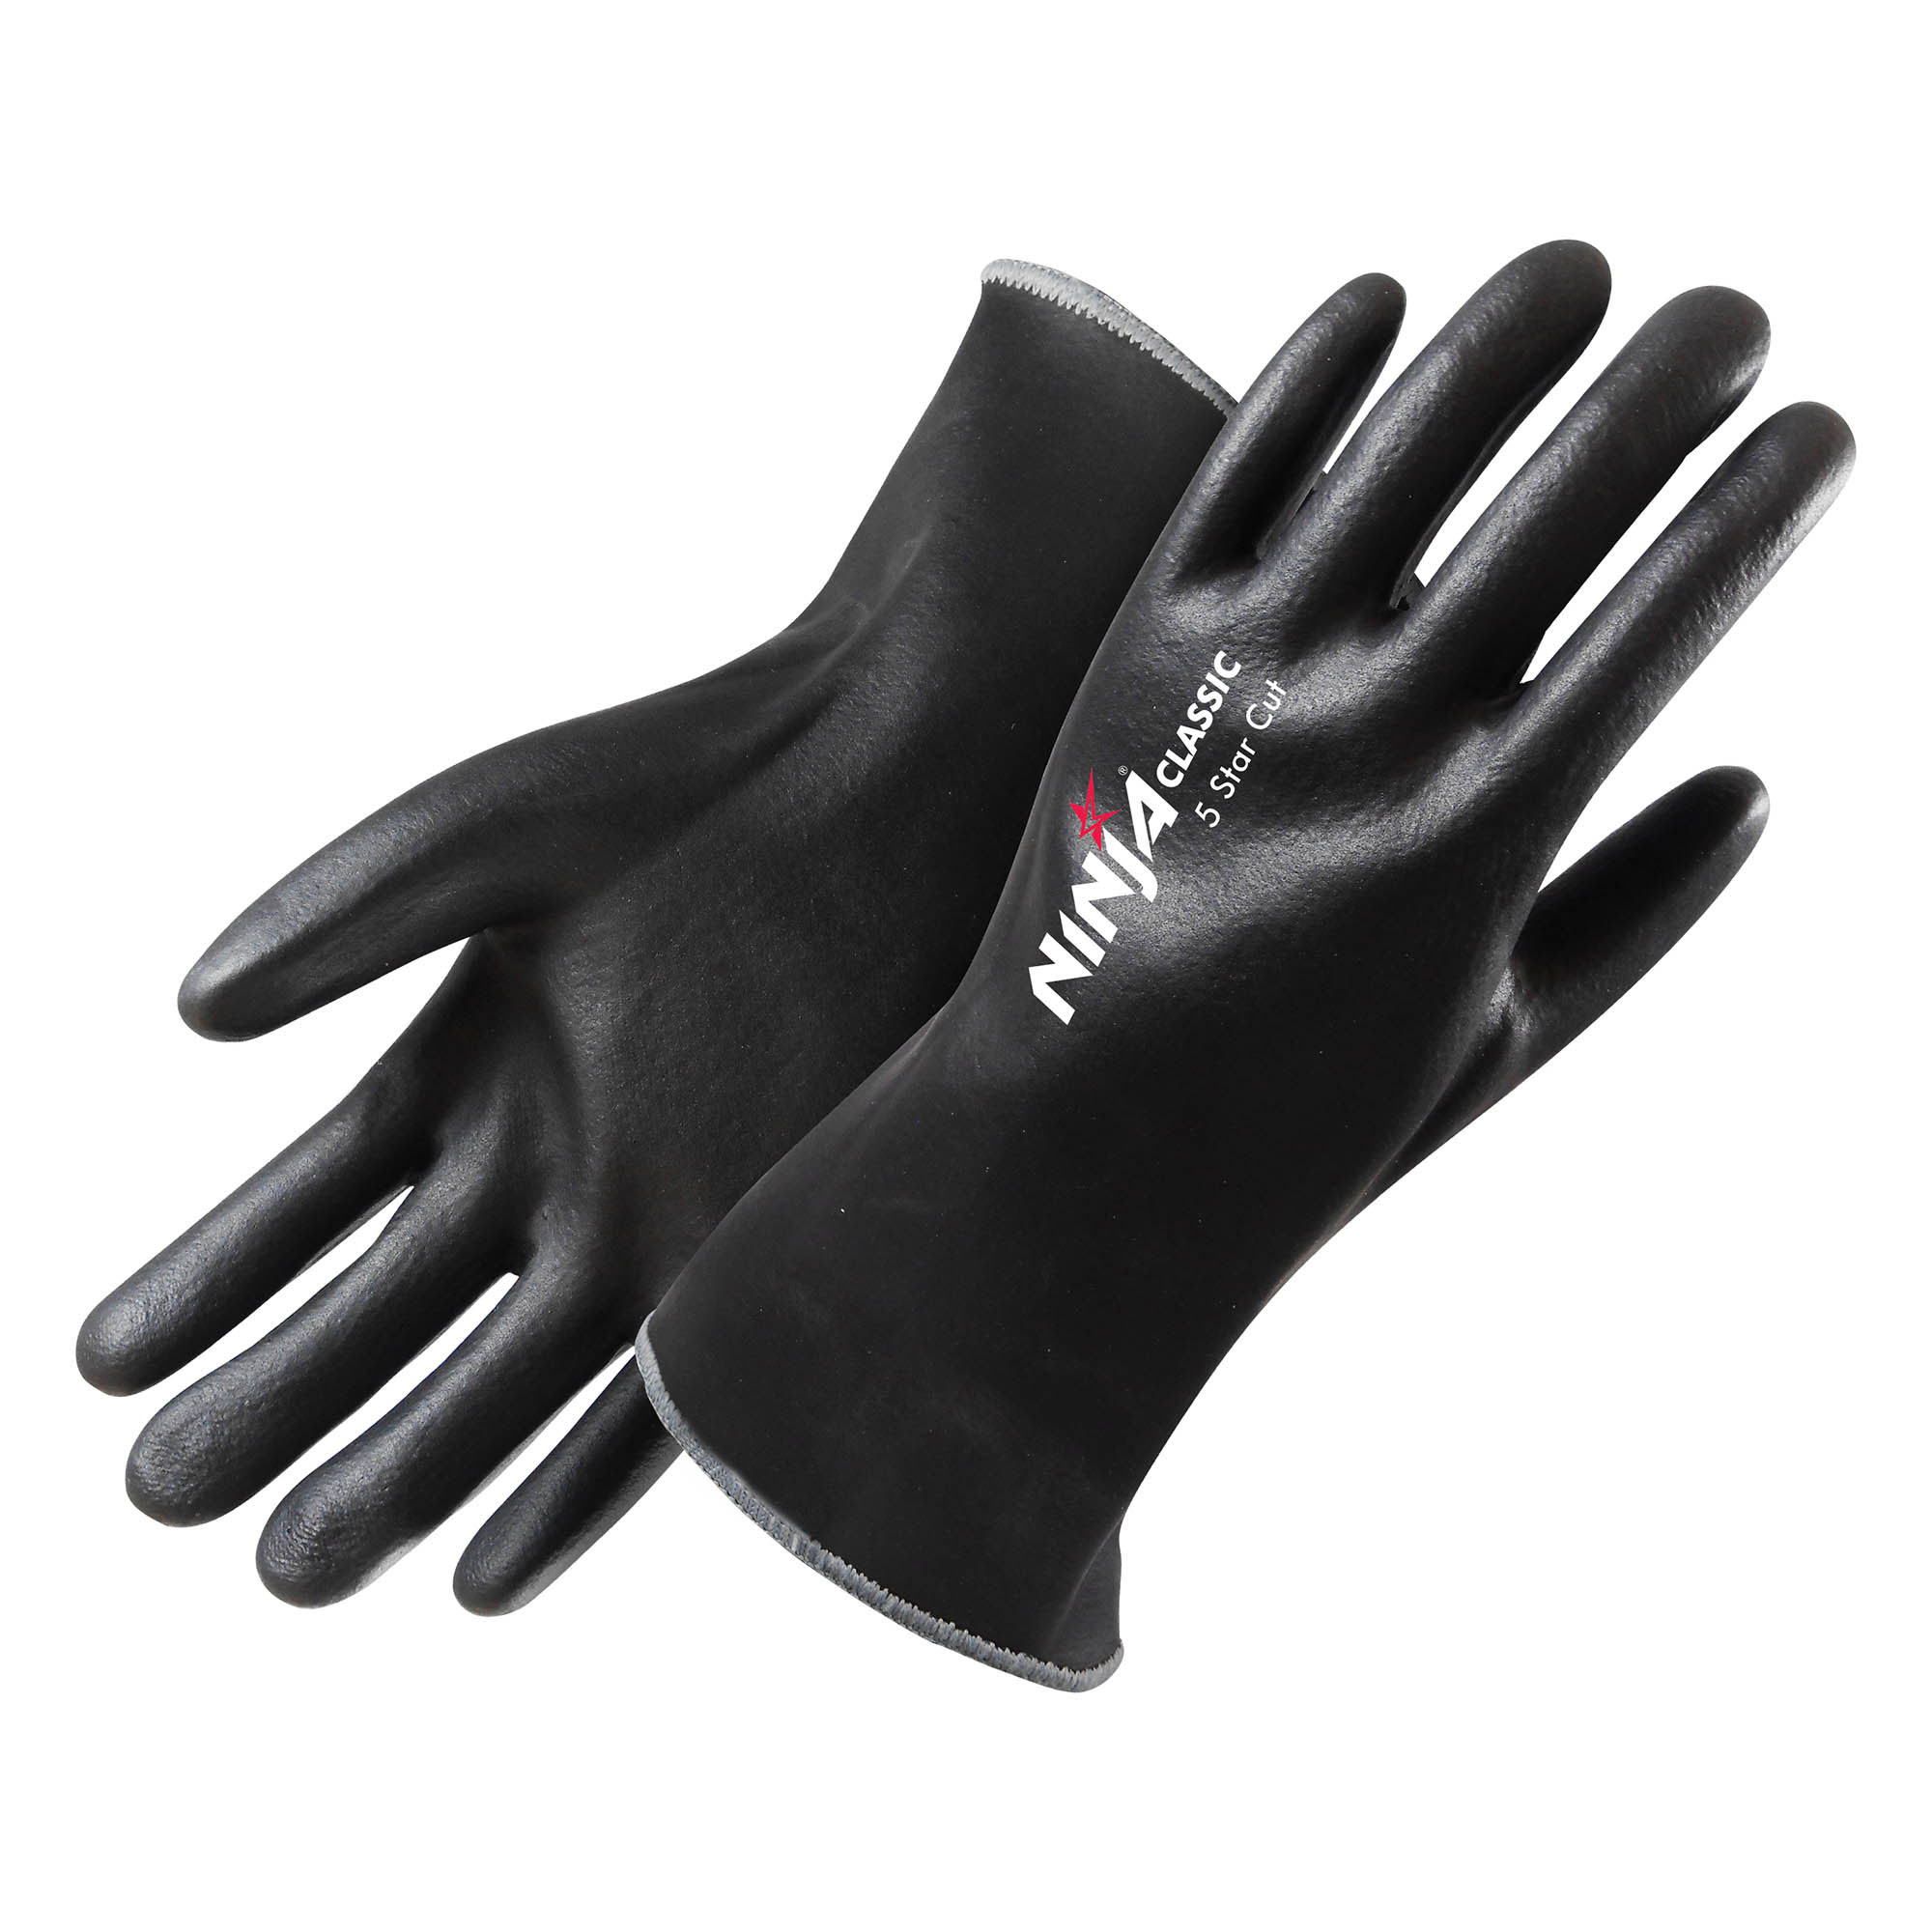 Ninja Celsius Ice Cold Resistant Gloves